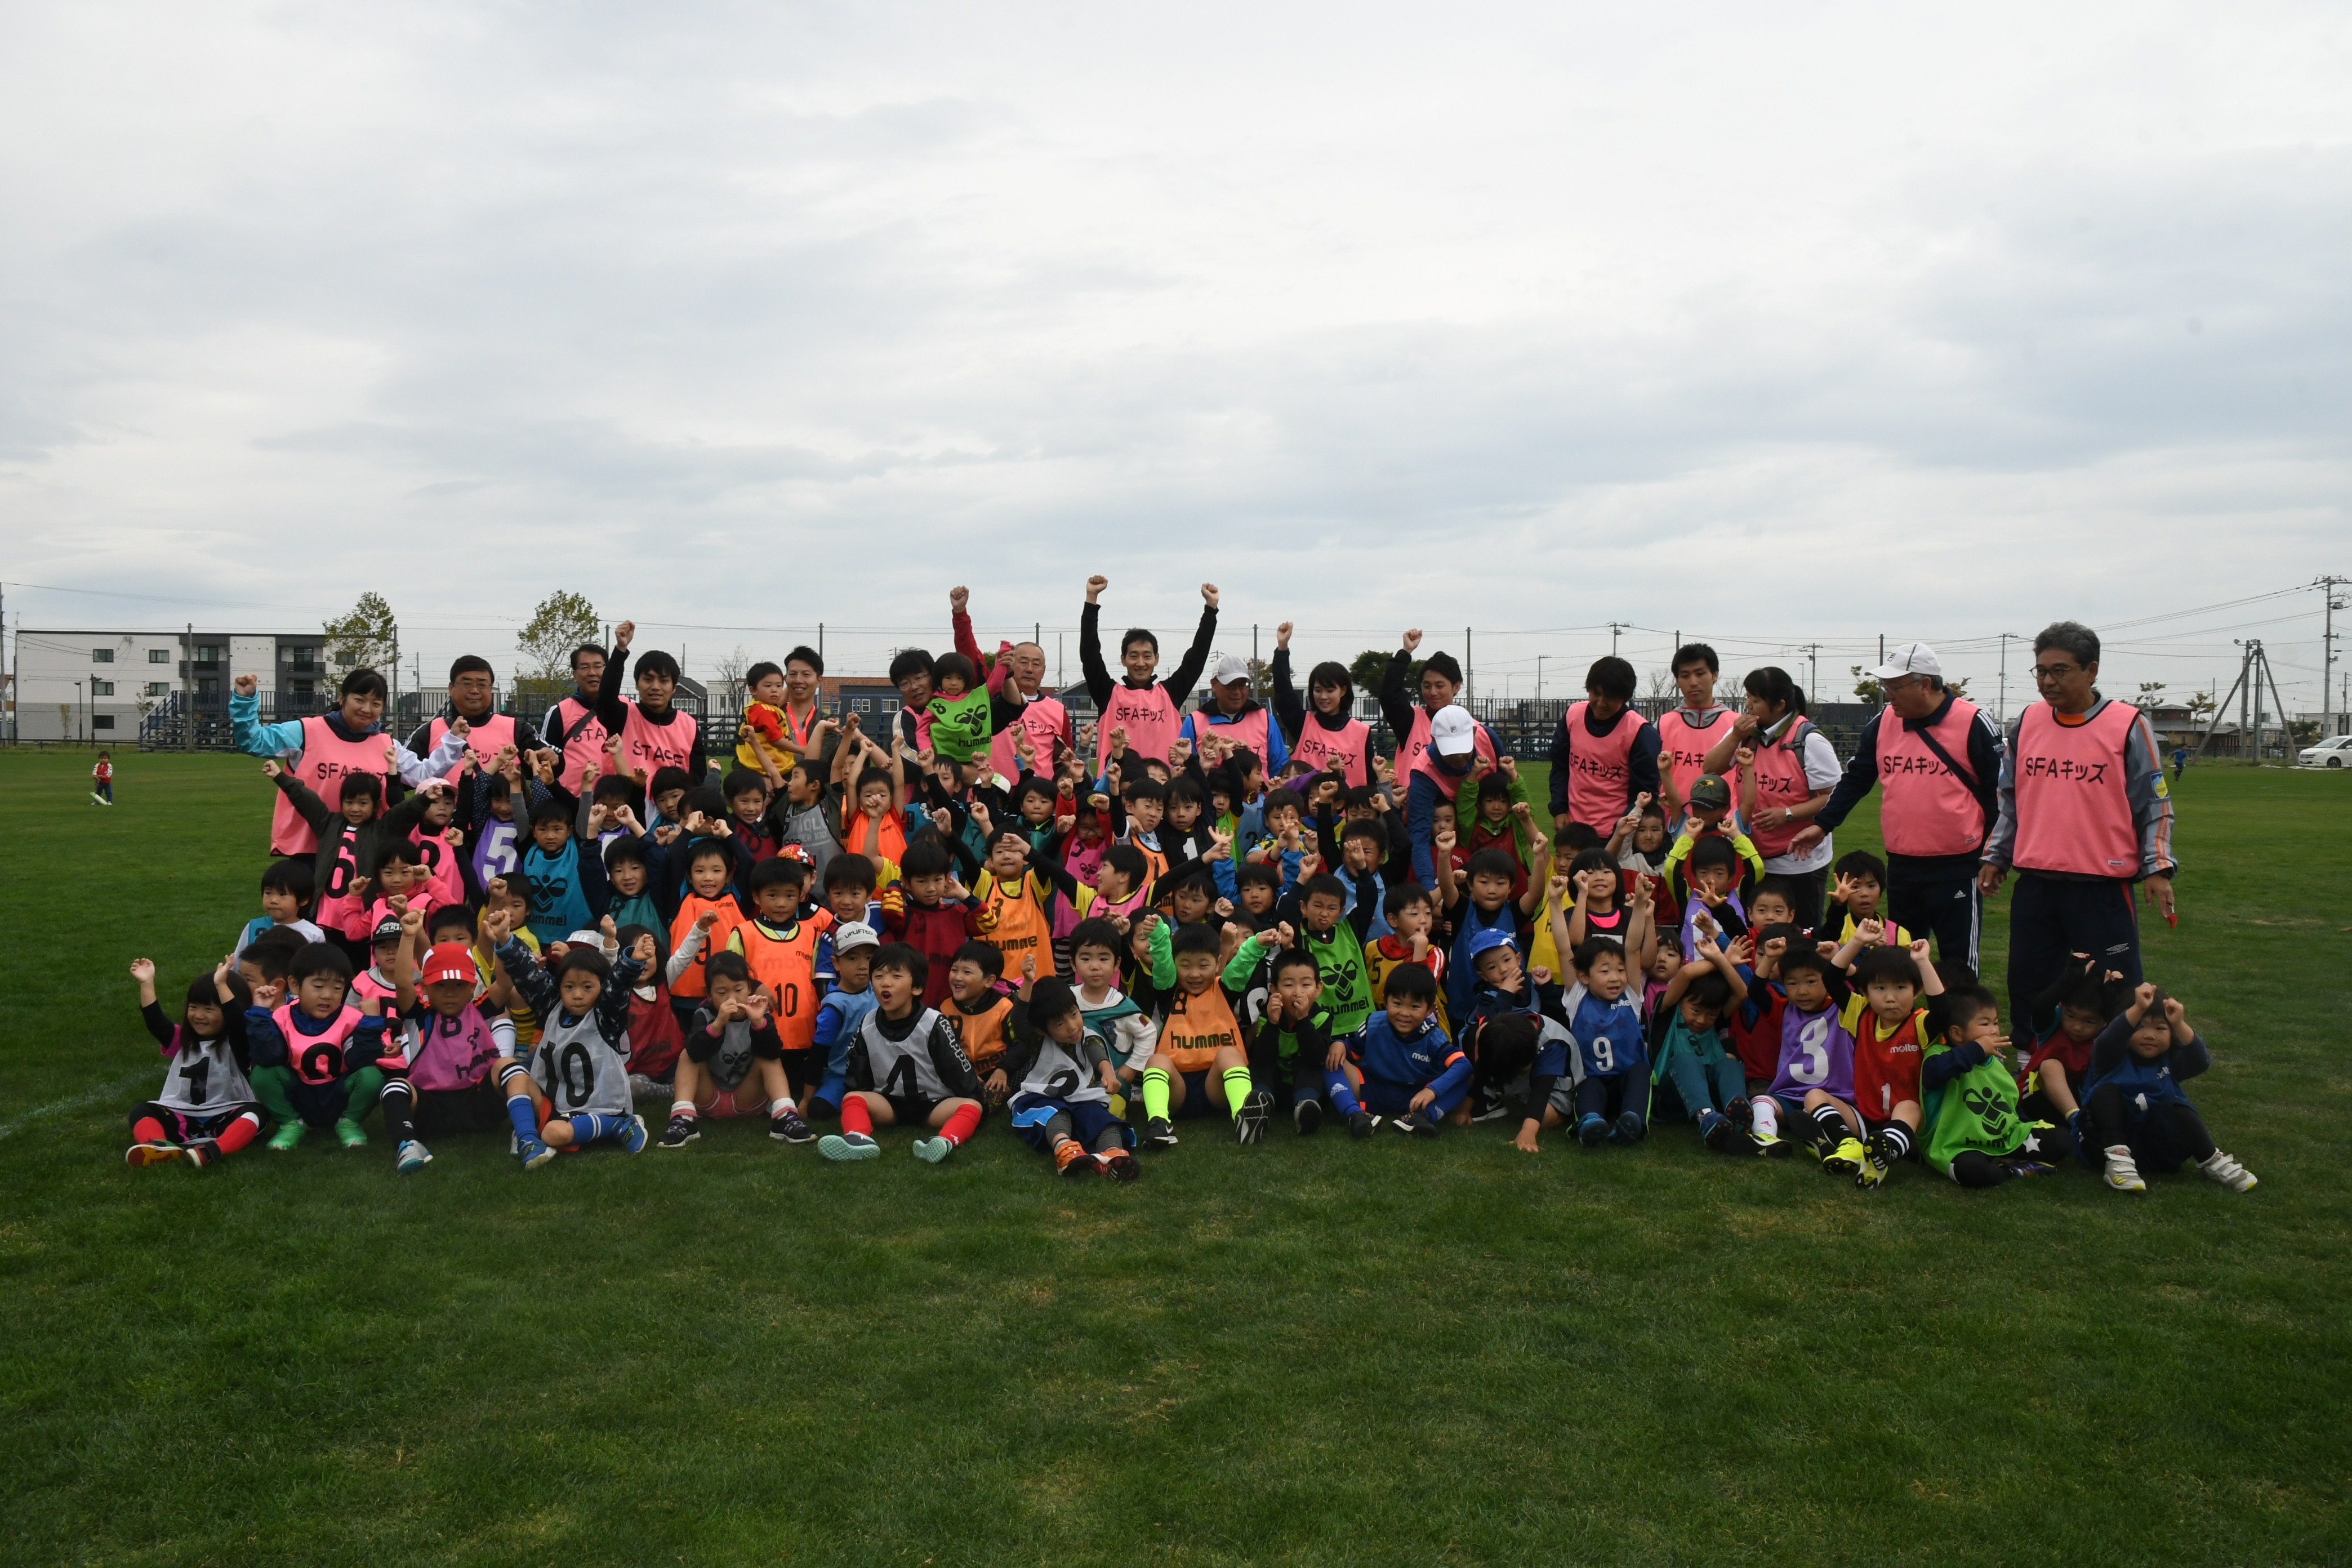 JFAキッズ（U-6）サッカーフェスティバル 北海道札幌市の札幌サッカーアミューズメントパーク天然芝グラウンドに96人が参加！